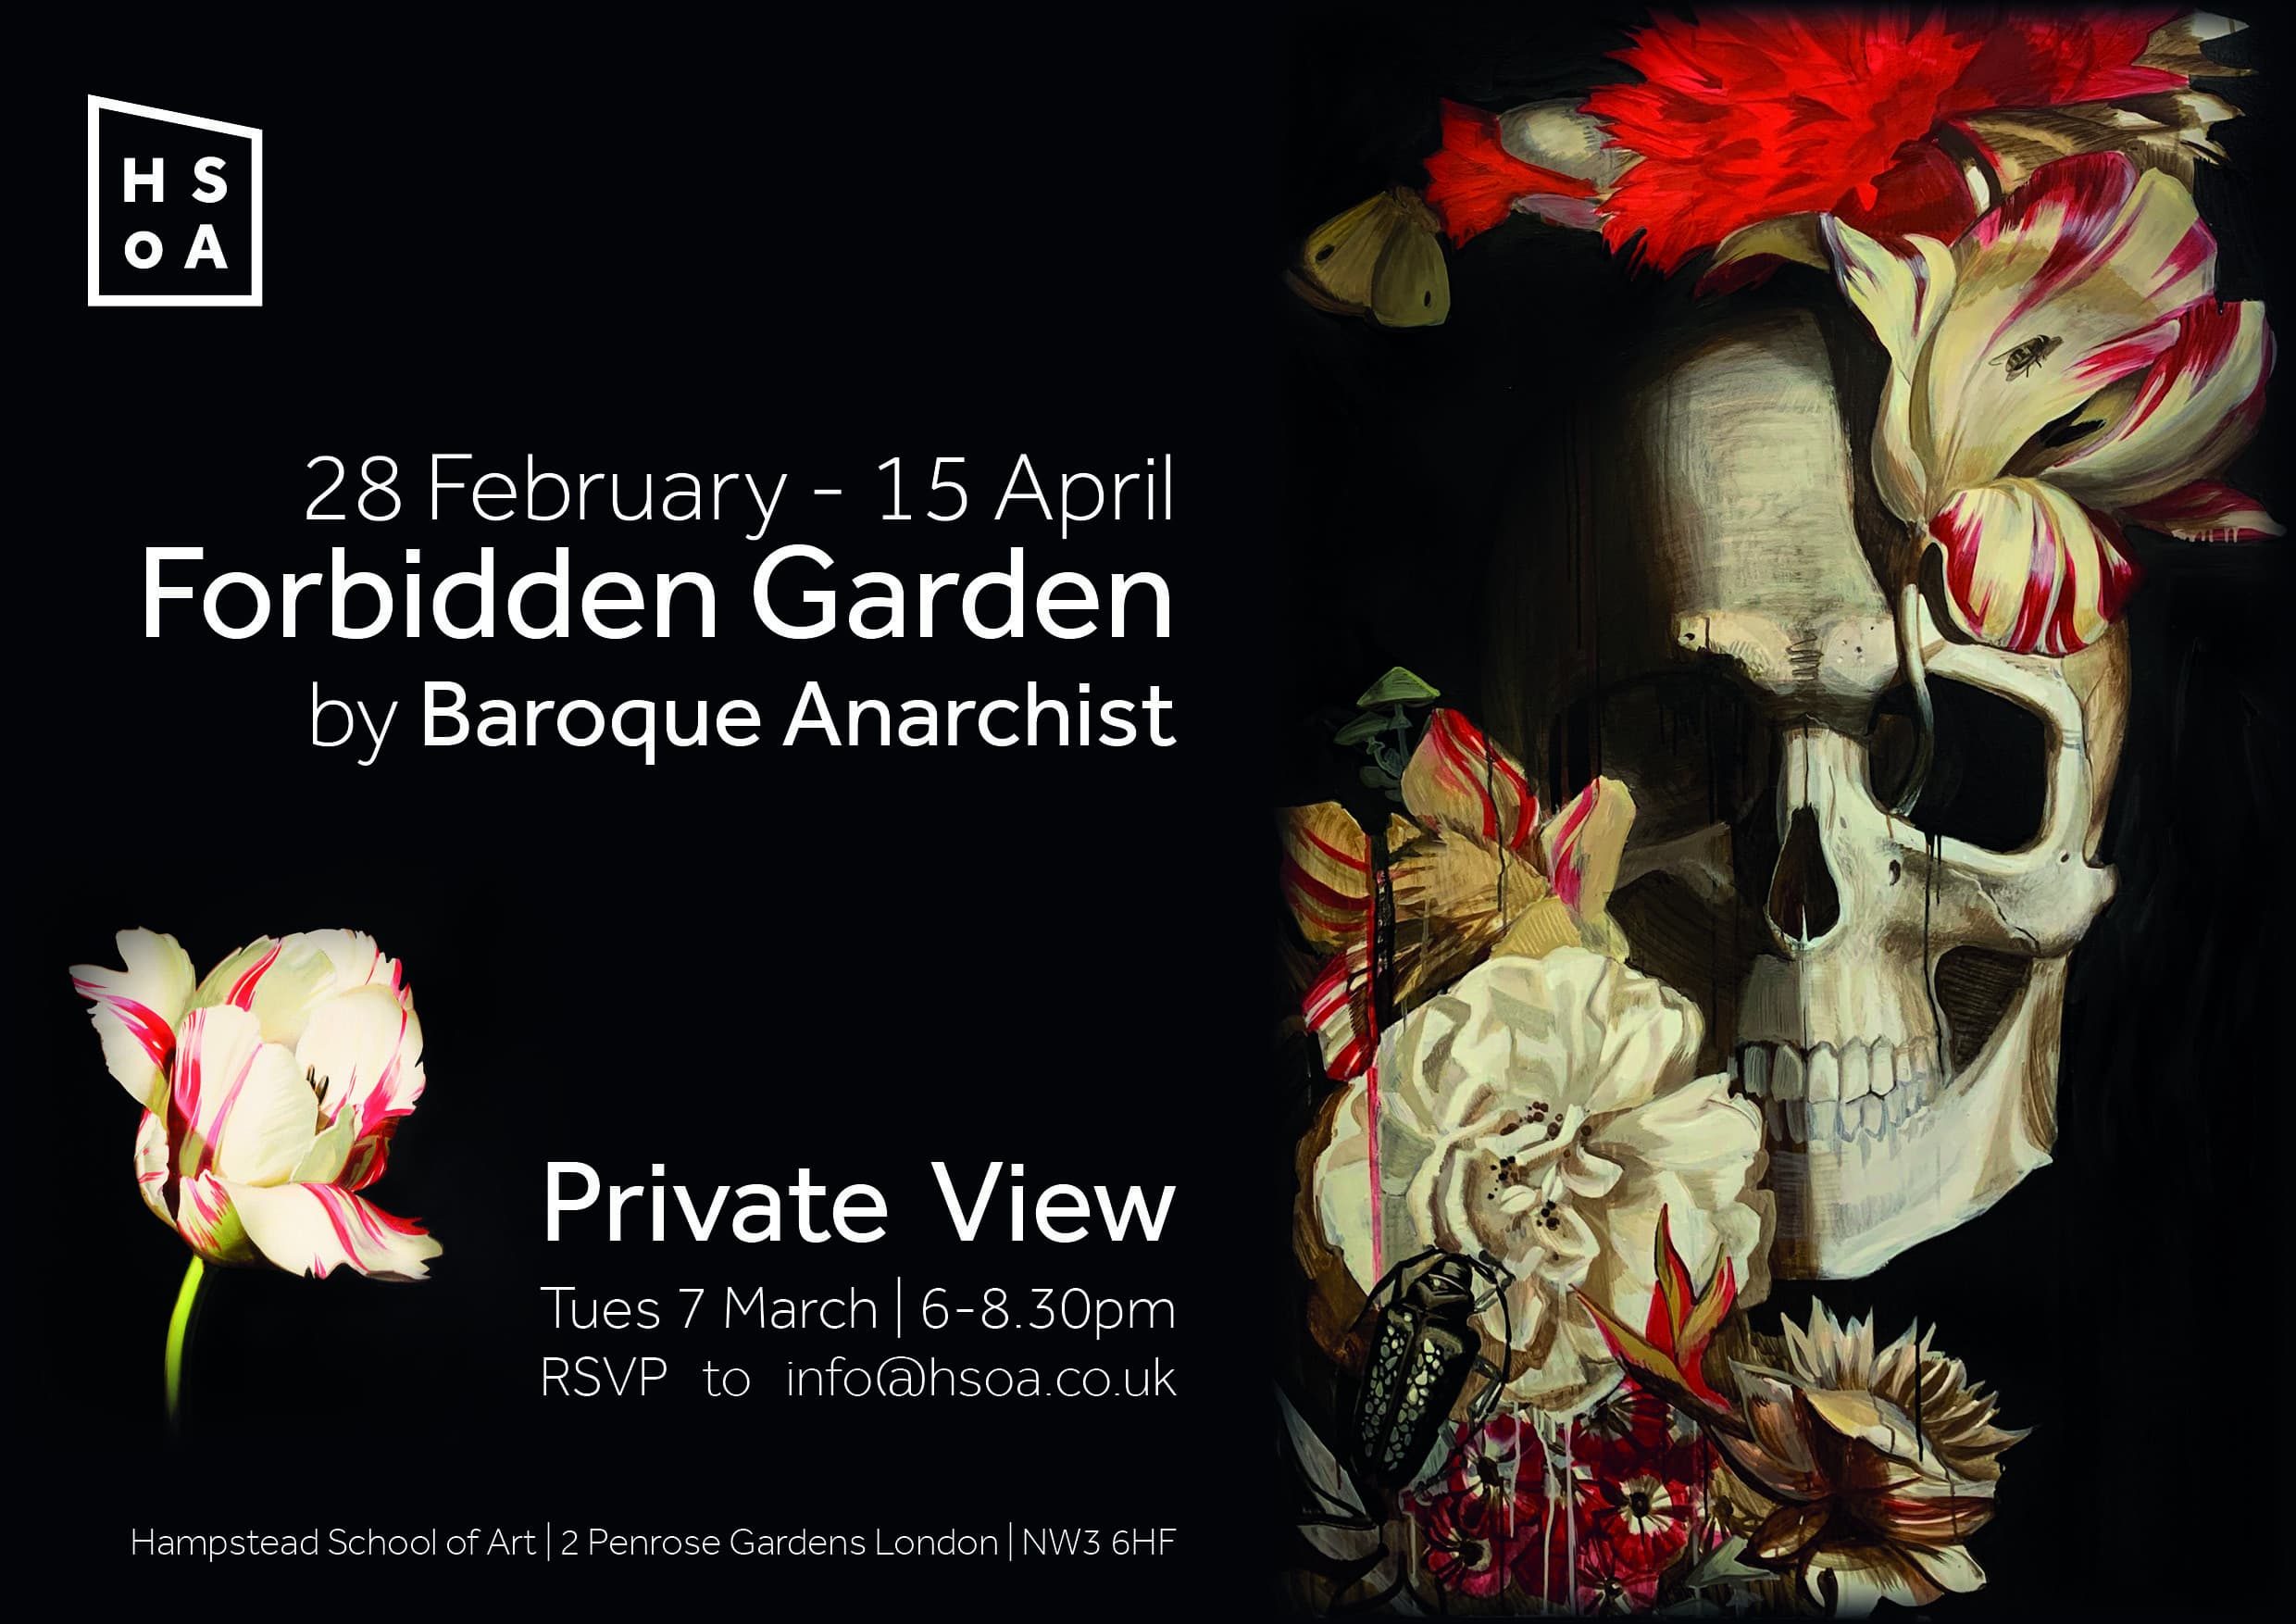 HSoA Gallery | 'Forbidden Garden' Exhibition by Baroque Anarchist